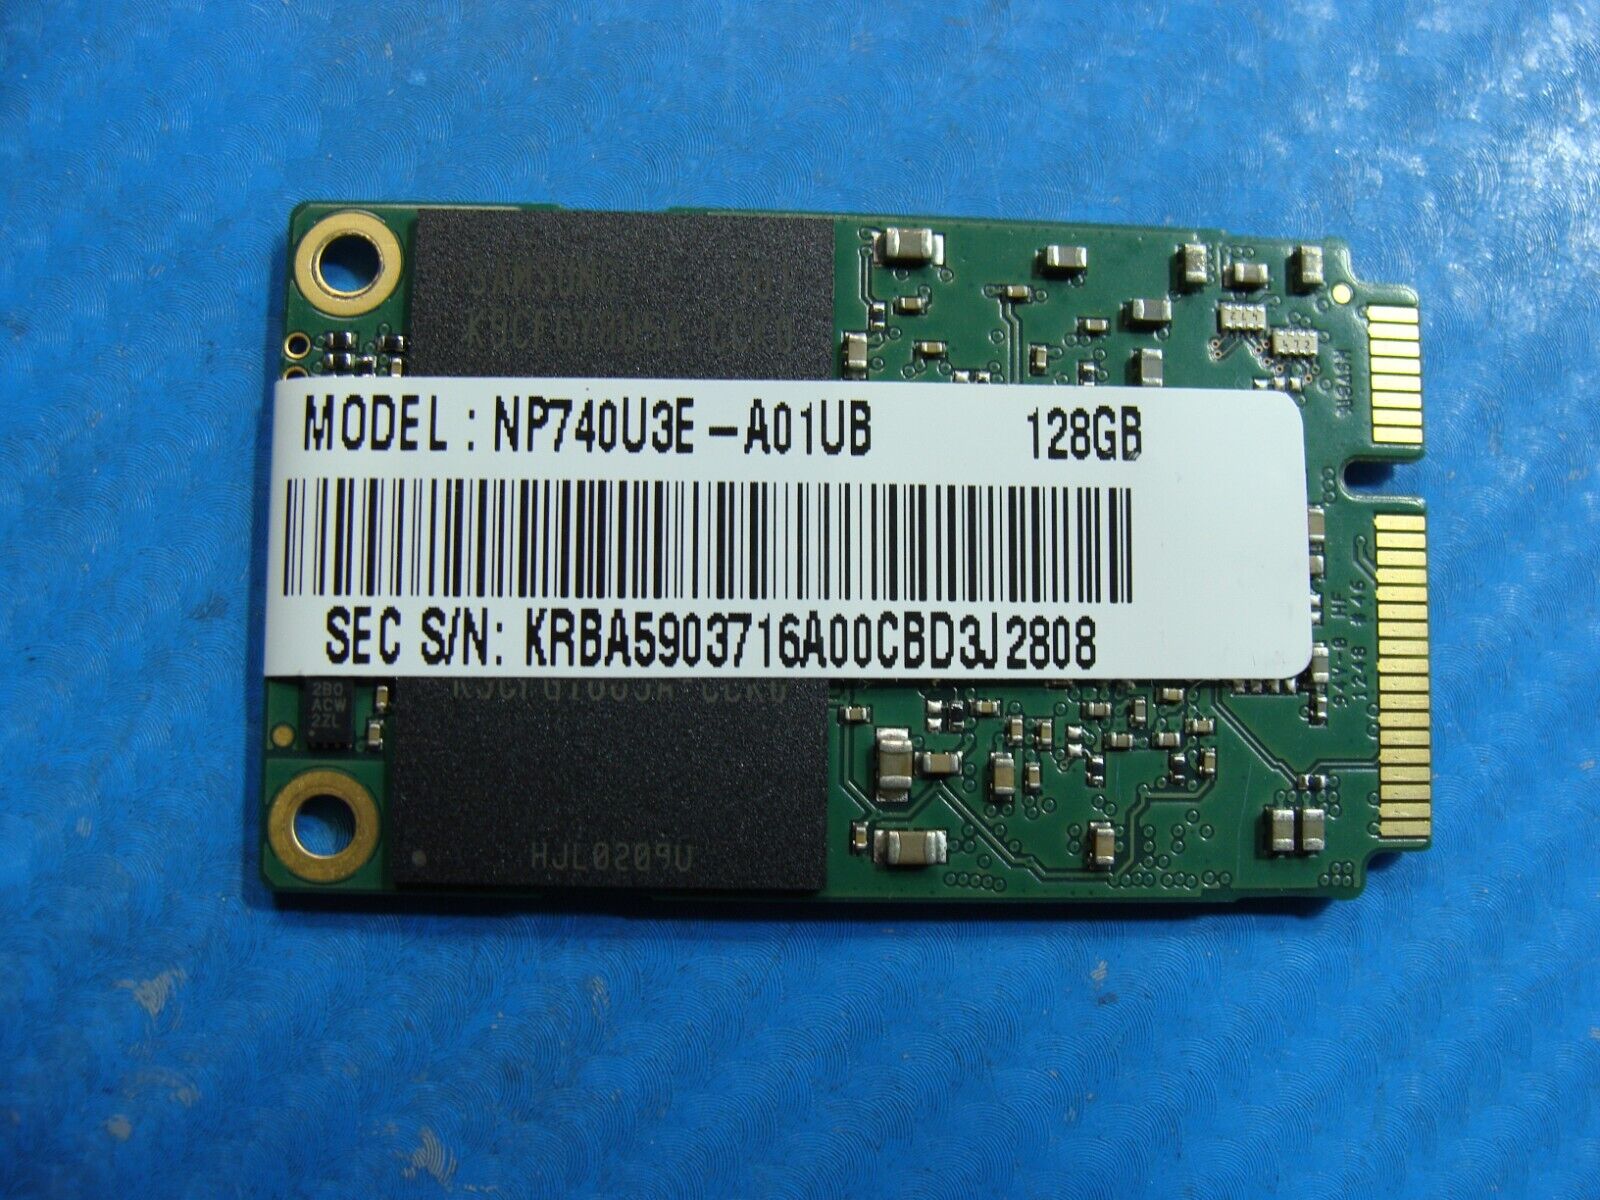 Samsung NP740U3E-A01UB 128GB mSATA SSD Solid State Drive MZMTD128HAFV-000KN